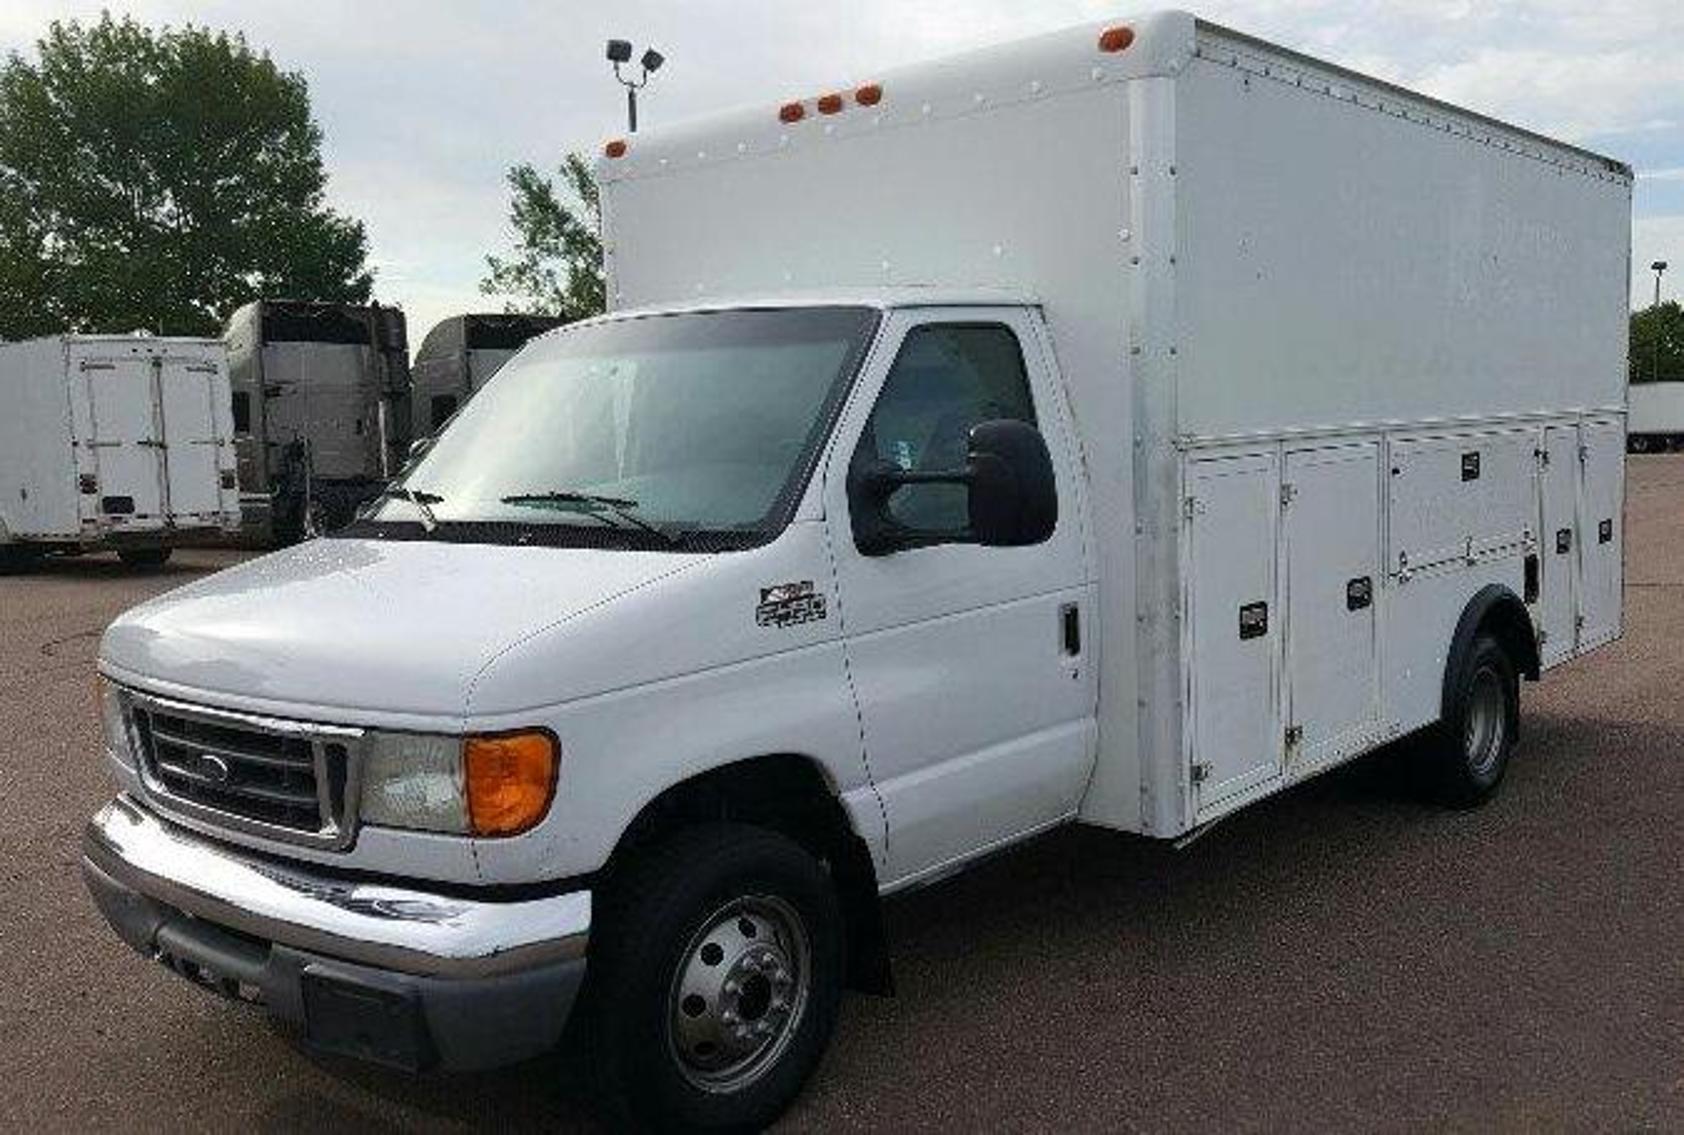 Boyer Truck & Equipment July Auction